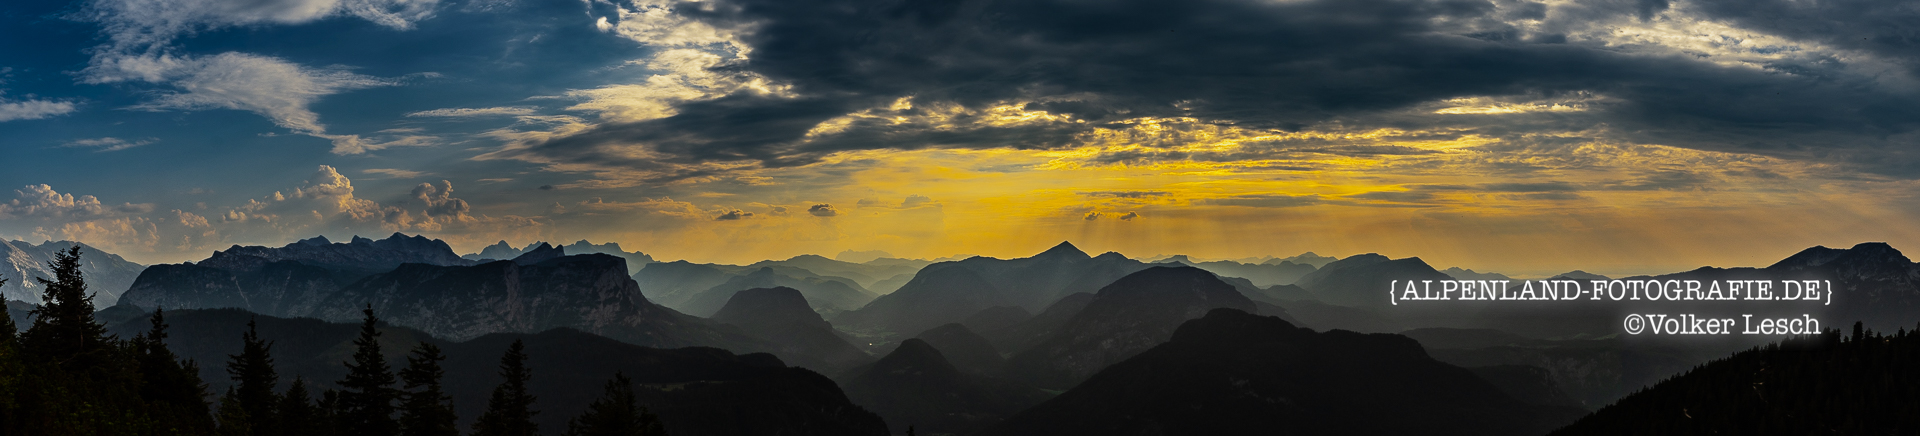 Sonnenuntergang auf dem Karkopf Berchtesgadener Land